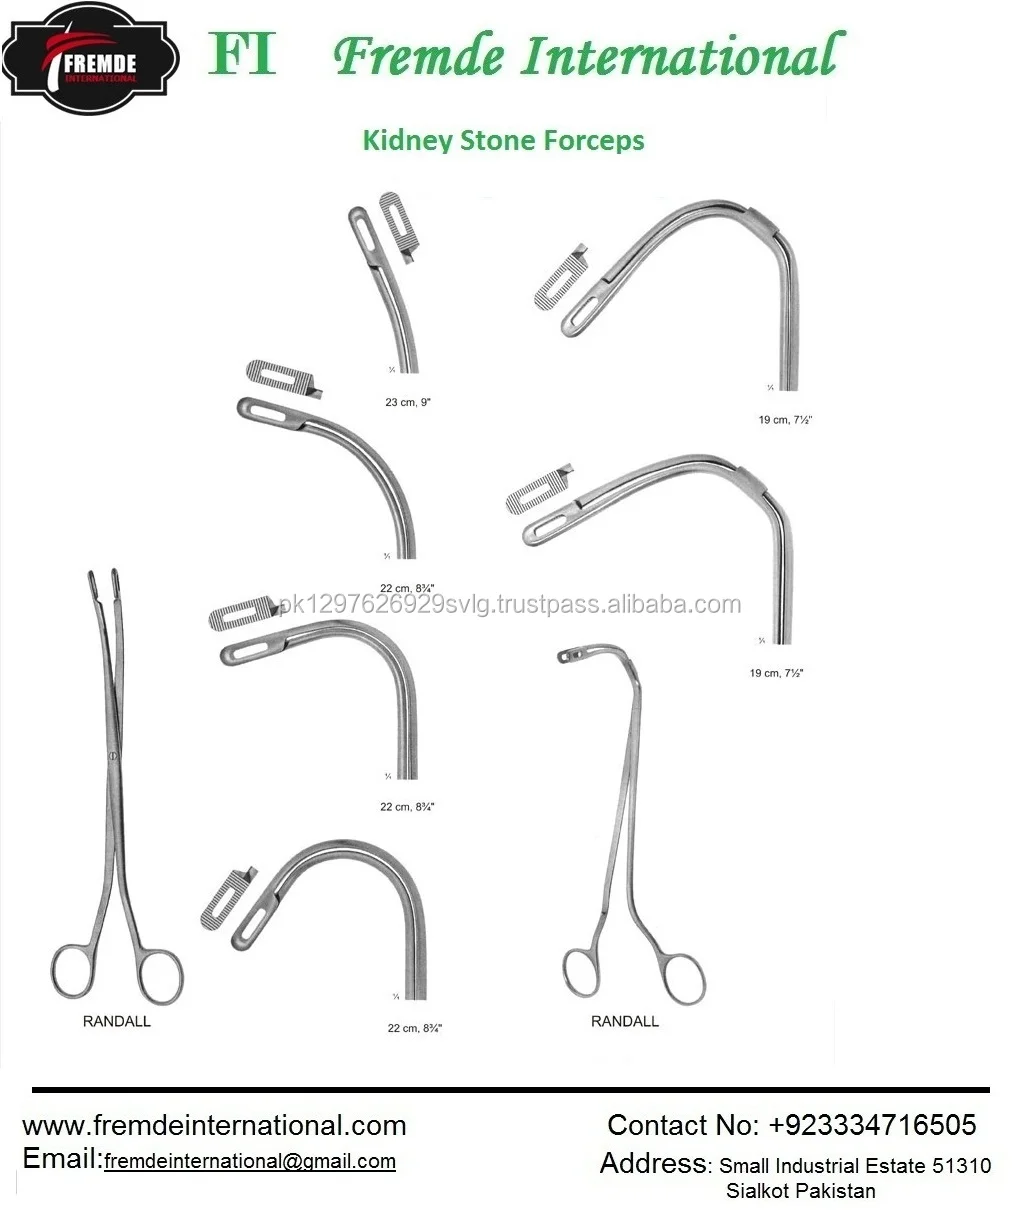 kidney stone forceps & randall kidney stone force